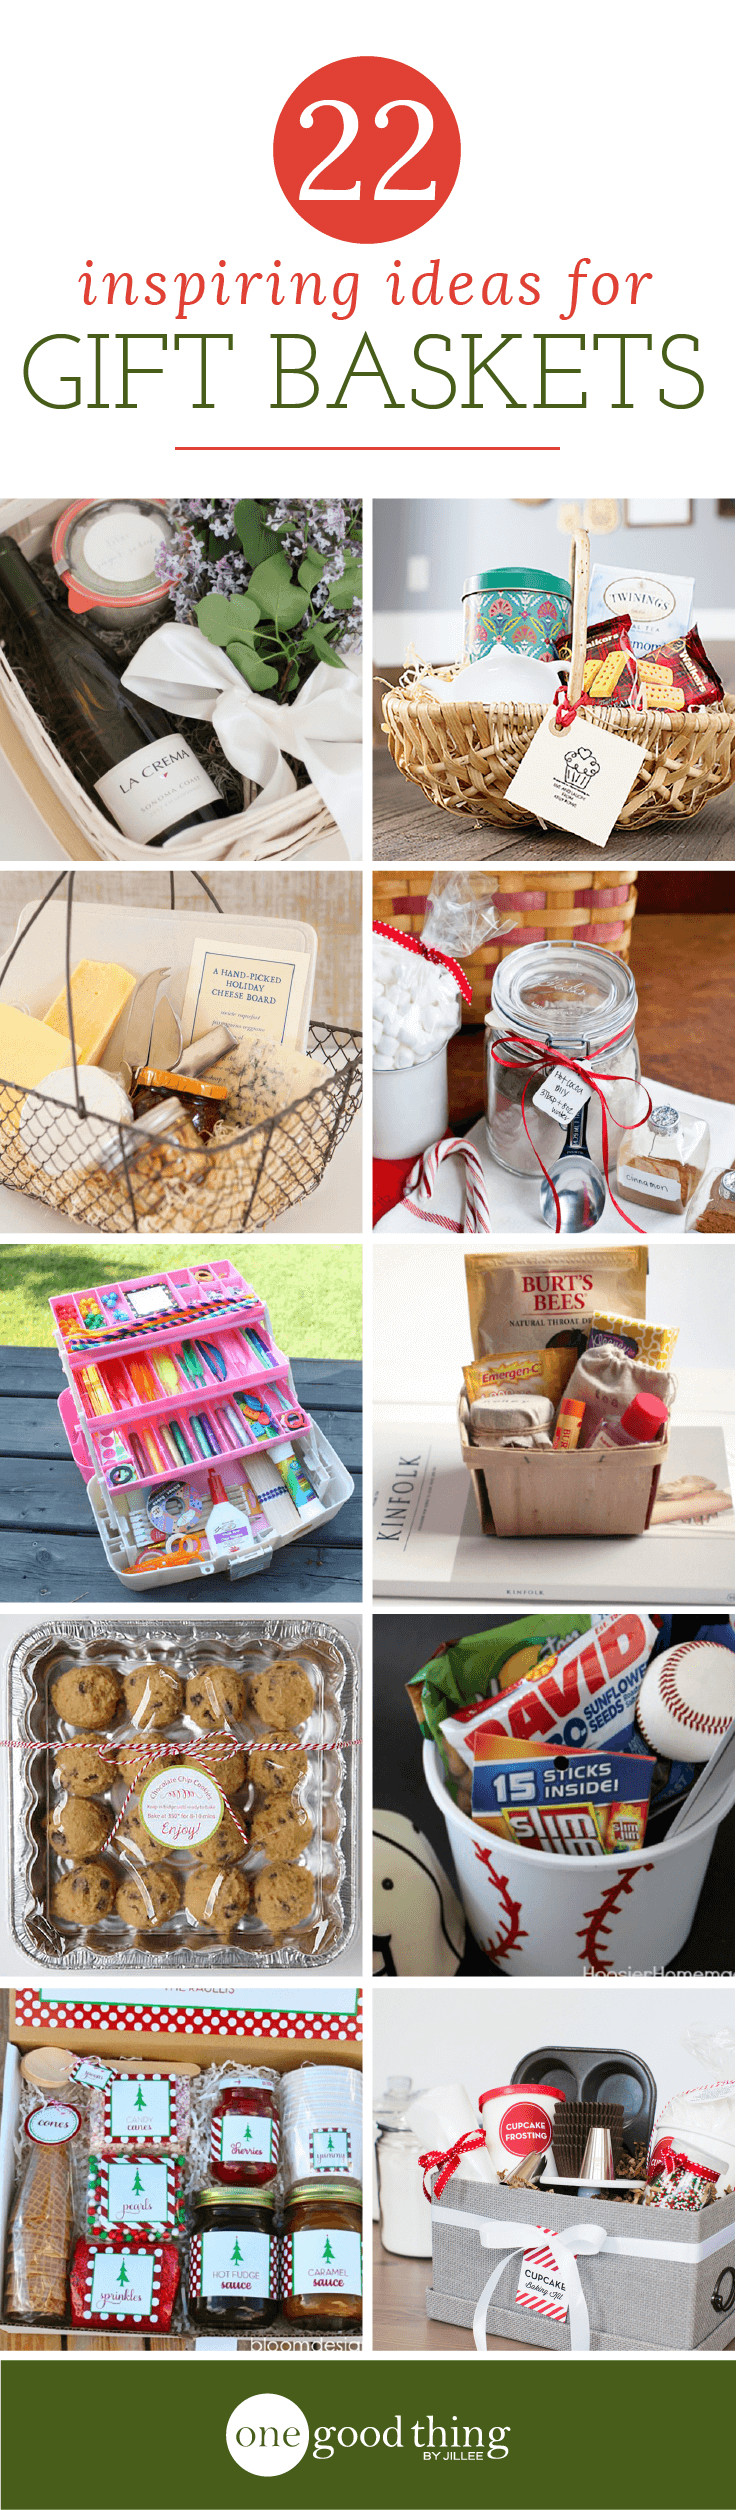 Fun Gift Basket Ideas
 22 Inspiring Gift Basket Ideas That You Can Easily Copy